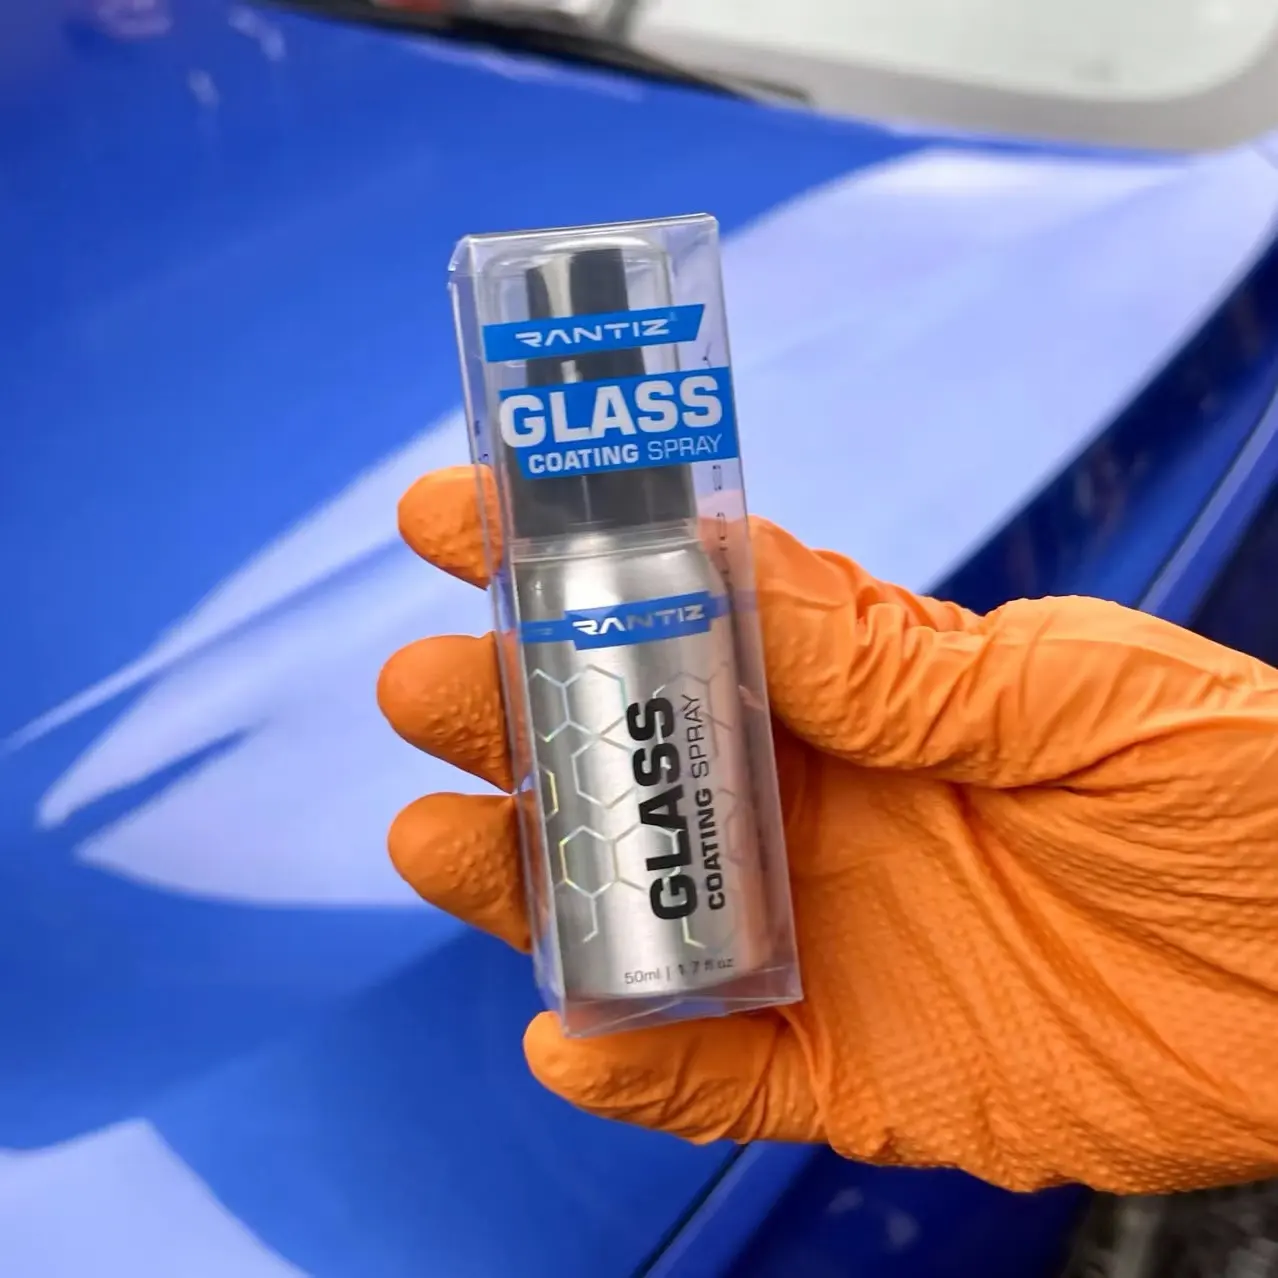 NANO GLASS COATING SPRAY 50ml | 1.7oz CAR CARE PROTECTION DETAILING LIQUID COATINGS | CERAMIC COATING FOR GLASS